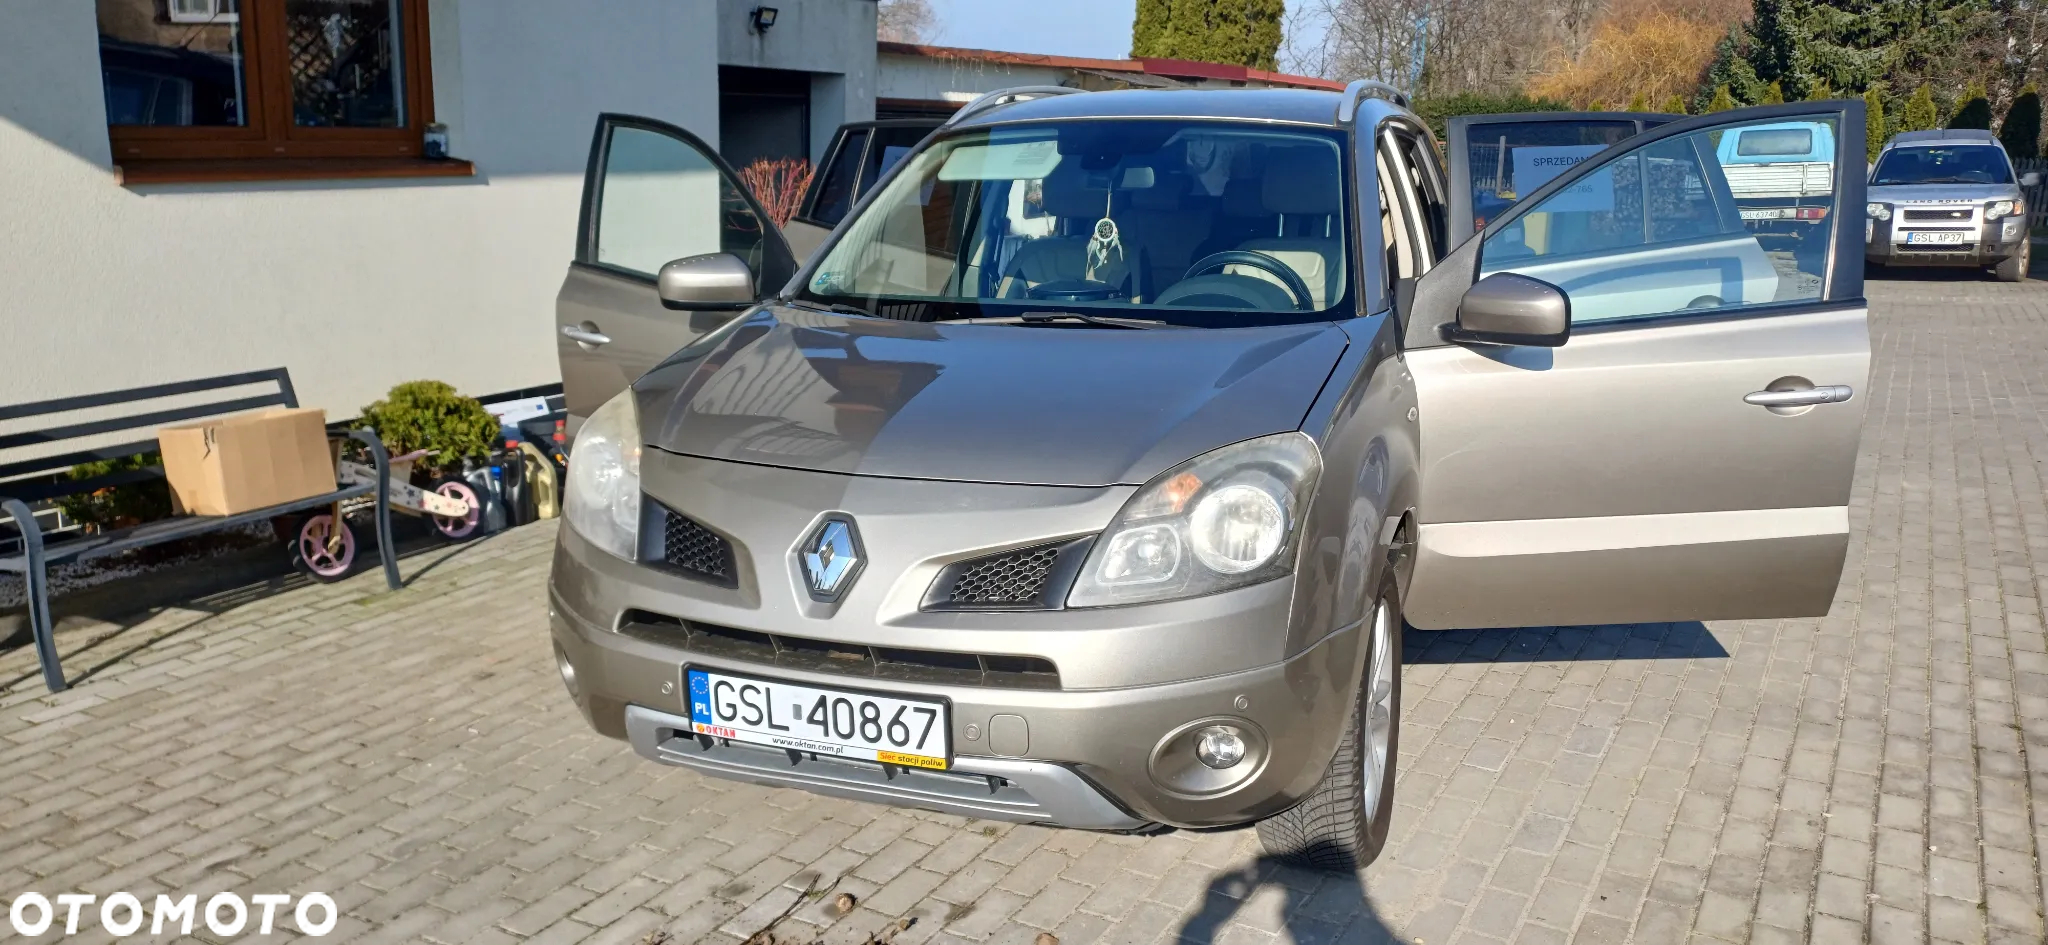 Renault Koleos 2.0 dCi 4x4 Dynamique - 6